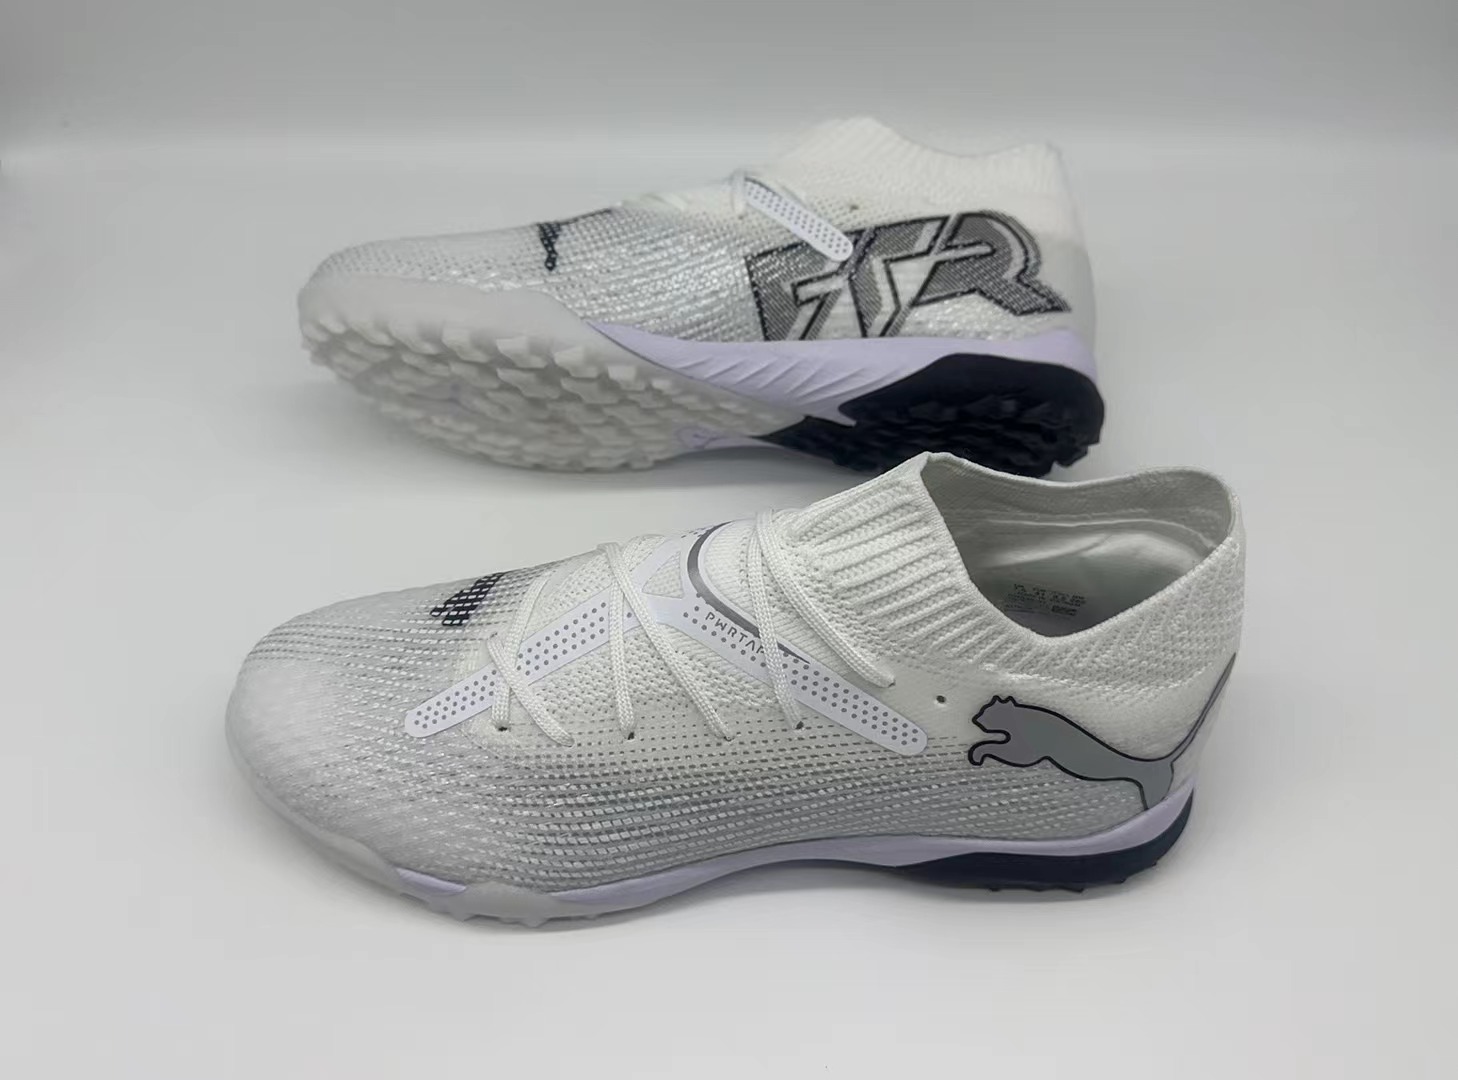 Puma Soccer Shoes-64